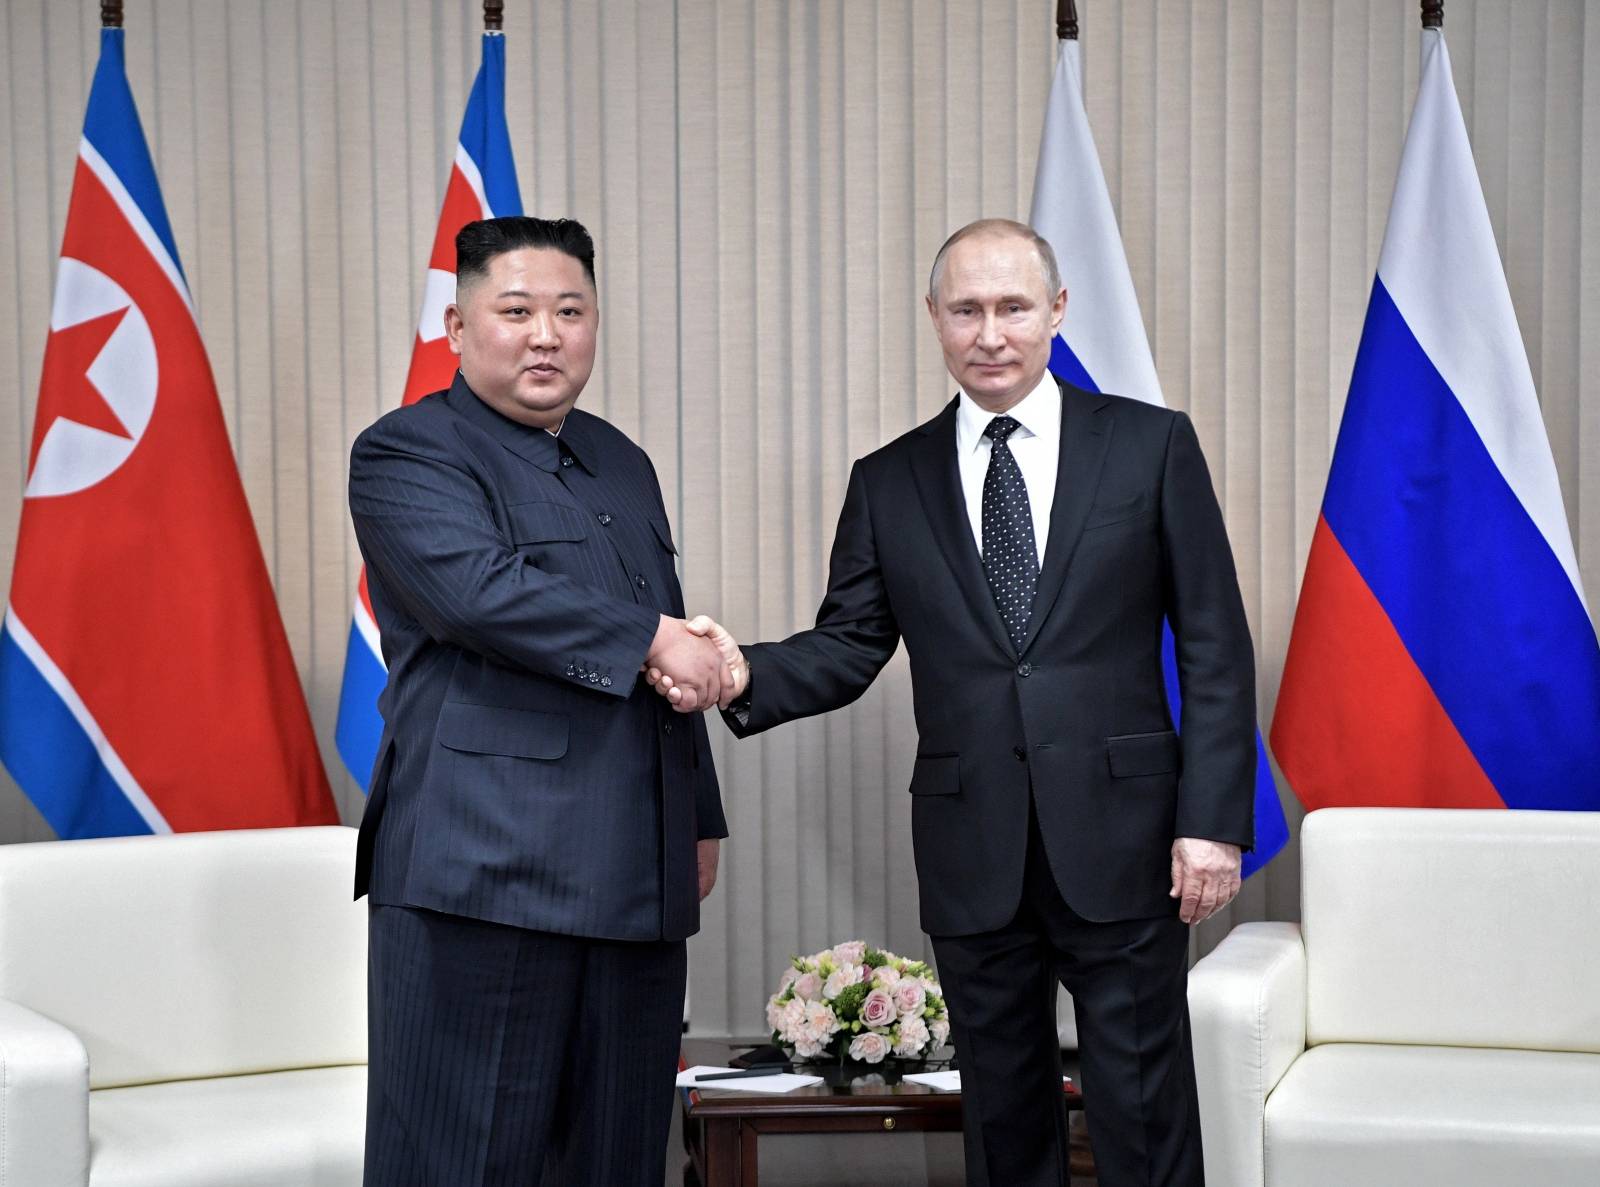 Russian President Vladimir Putin meets with North Korea's leader Kim Jong Un in Vladivostok